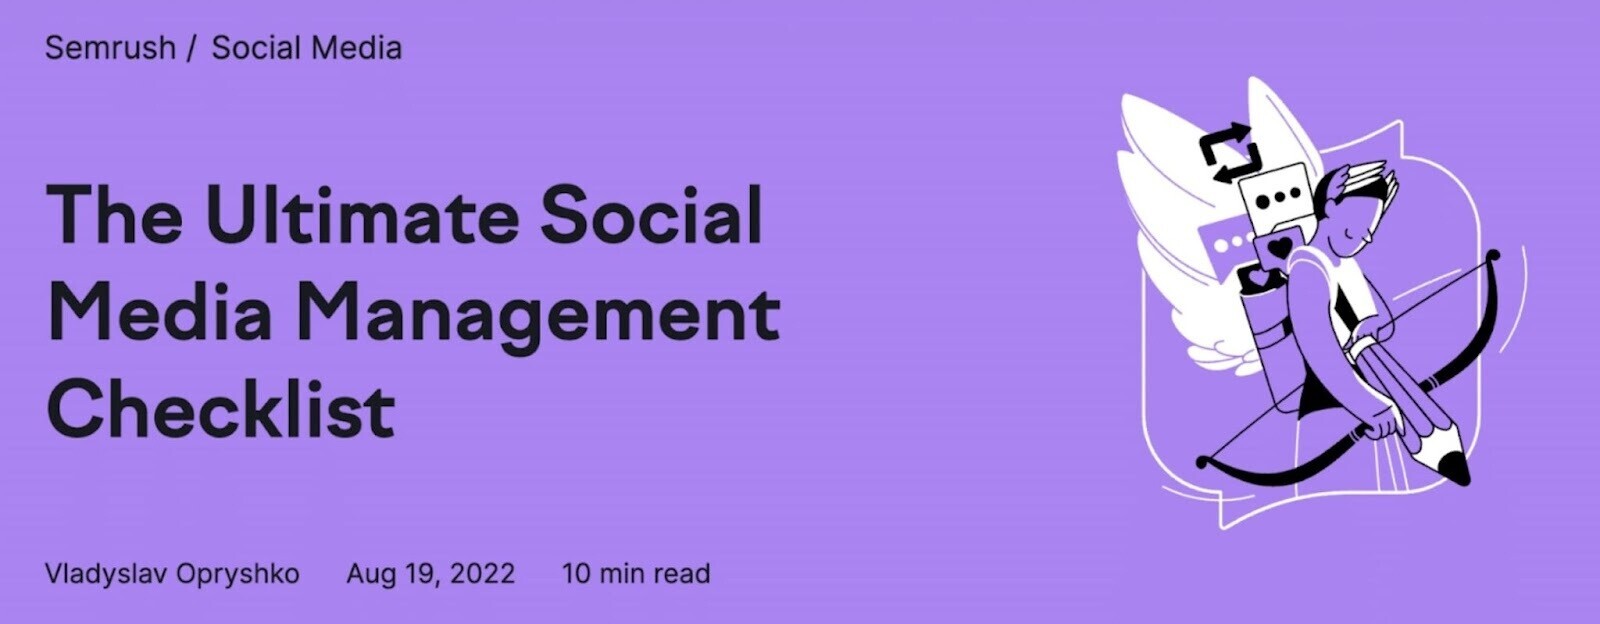 "The Ultimate Social Media Management Checklist" blog title